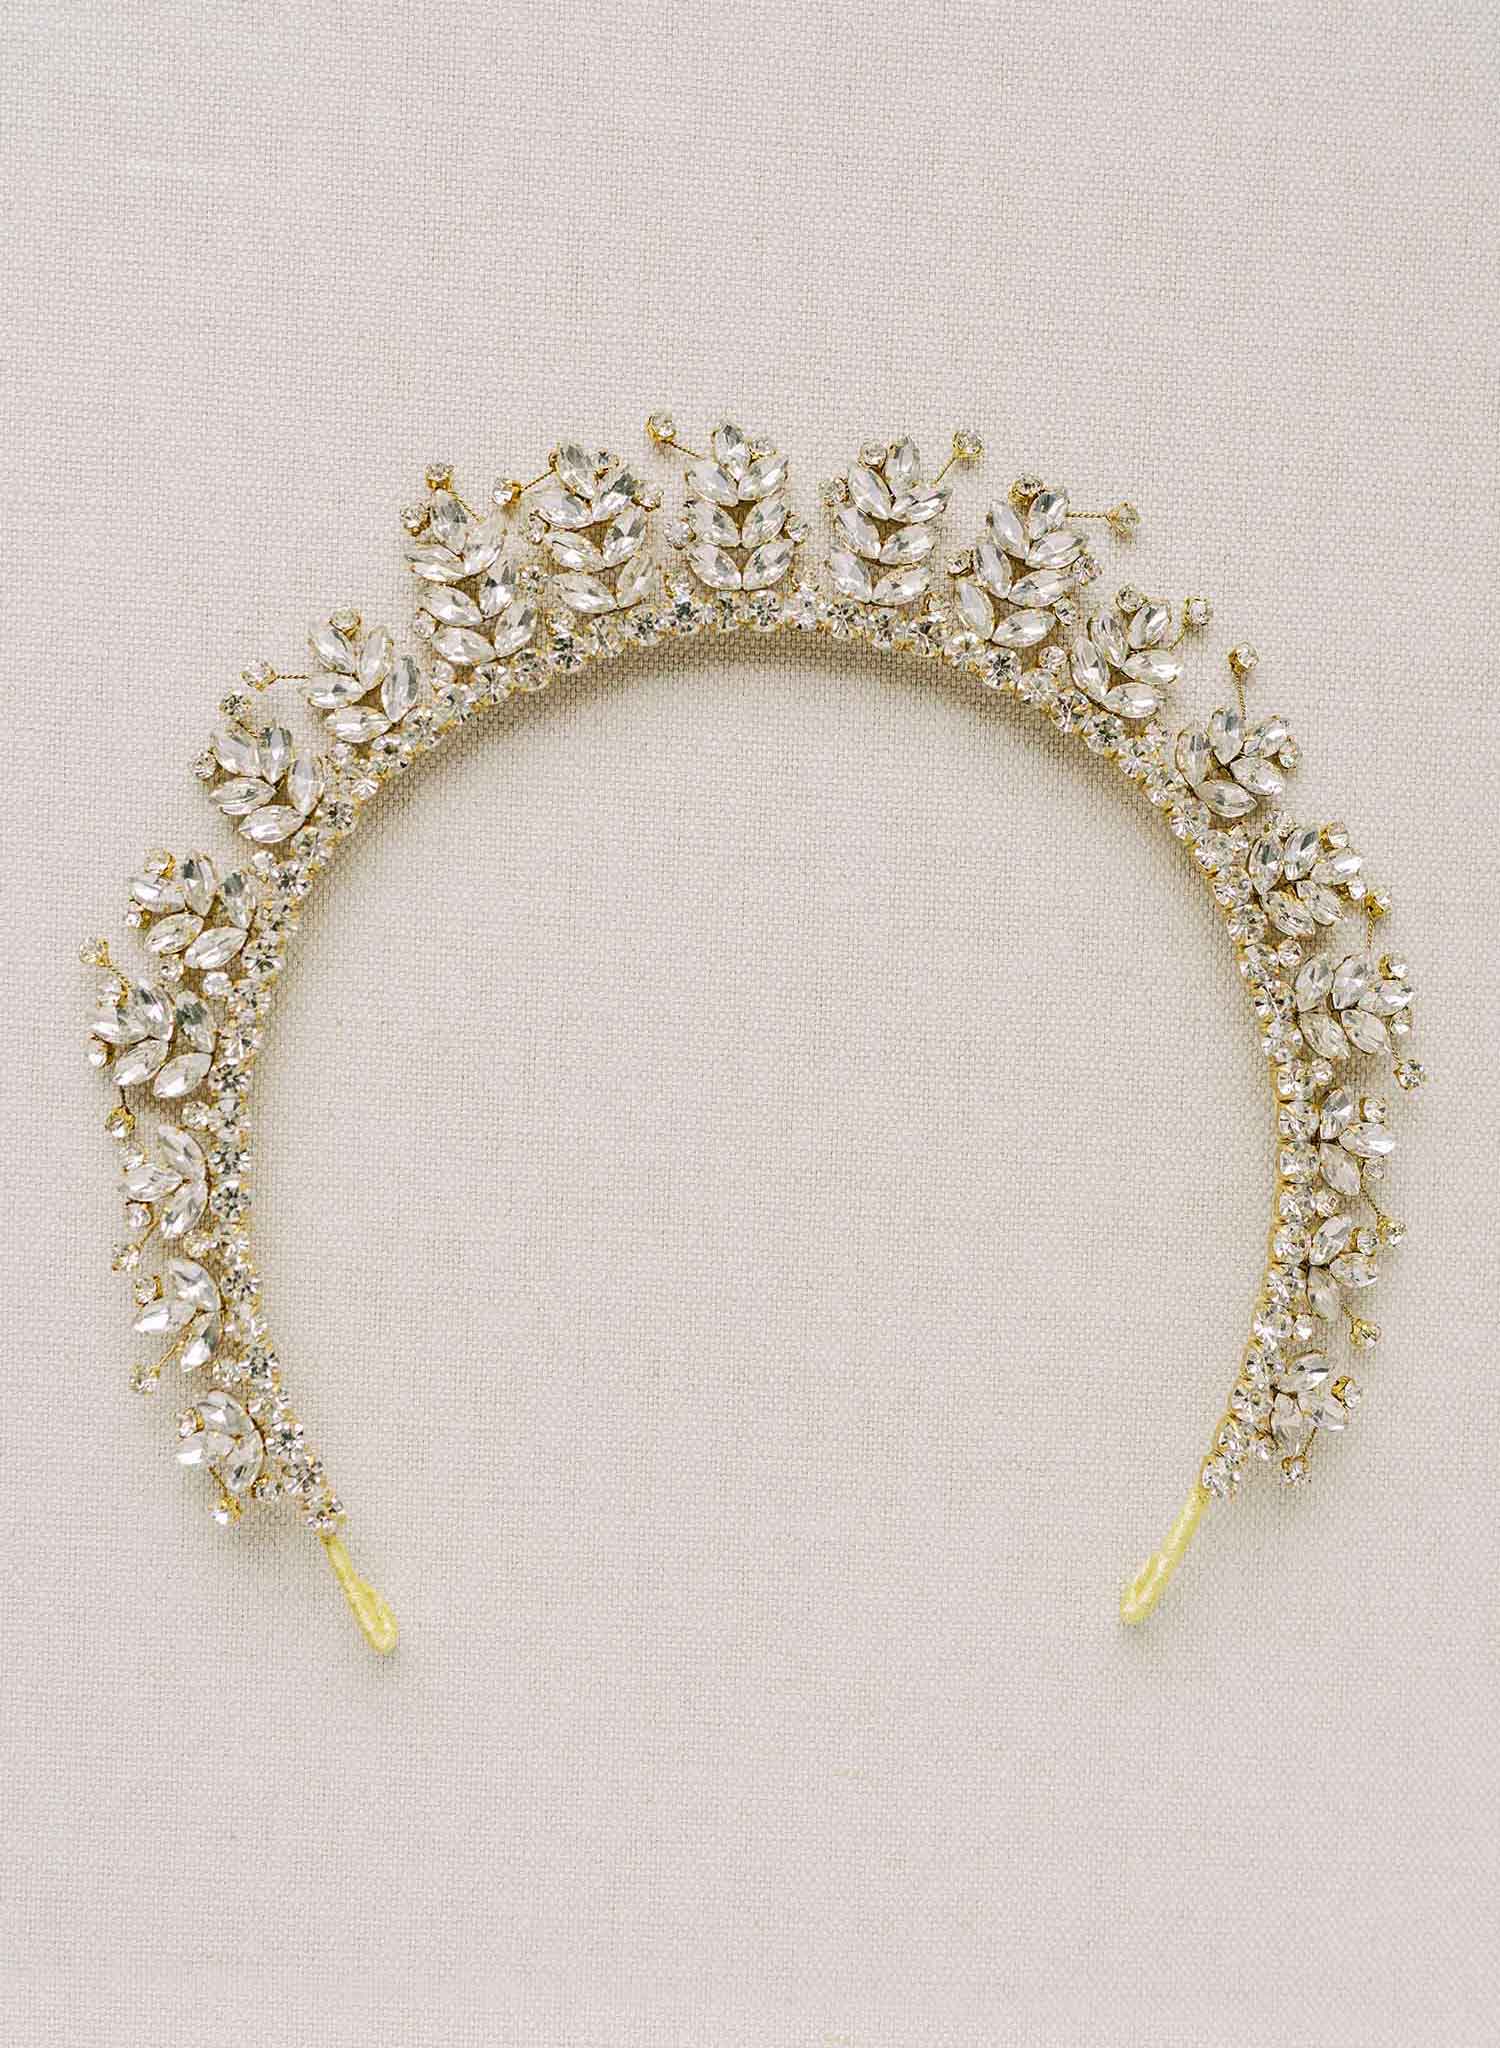 Glory bridal crystal tiara - Style #21013